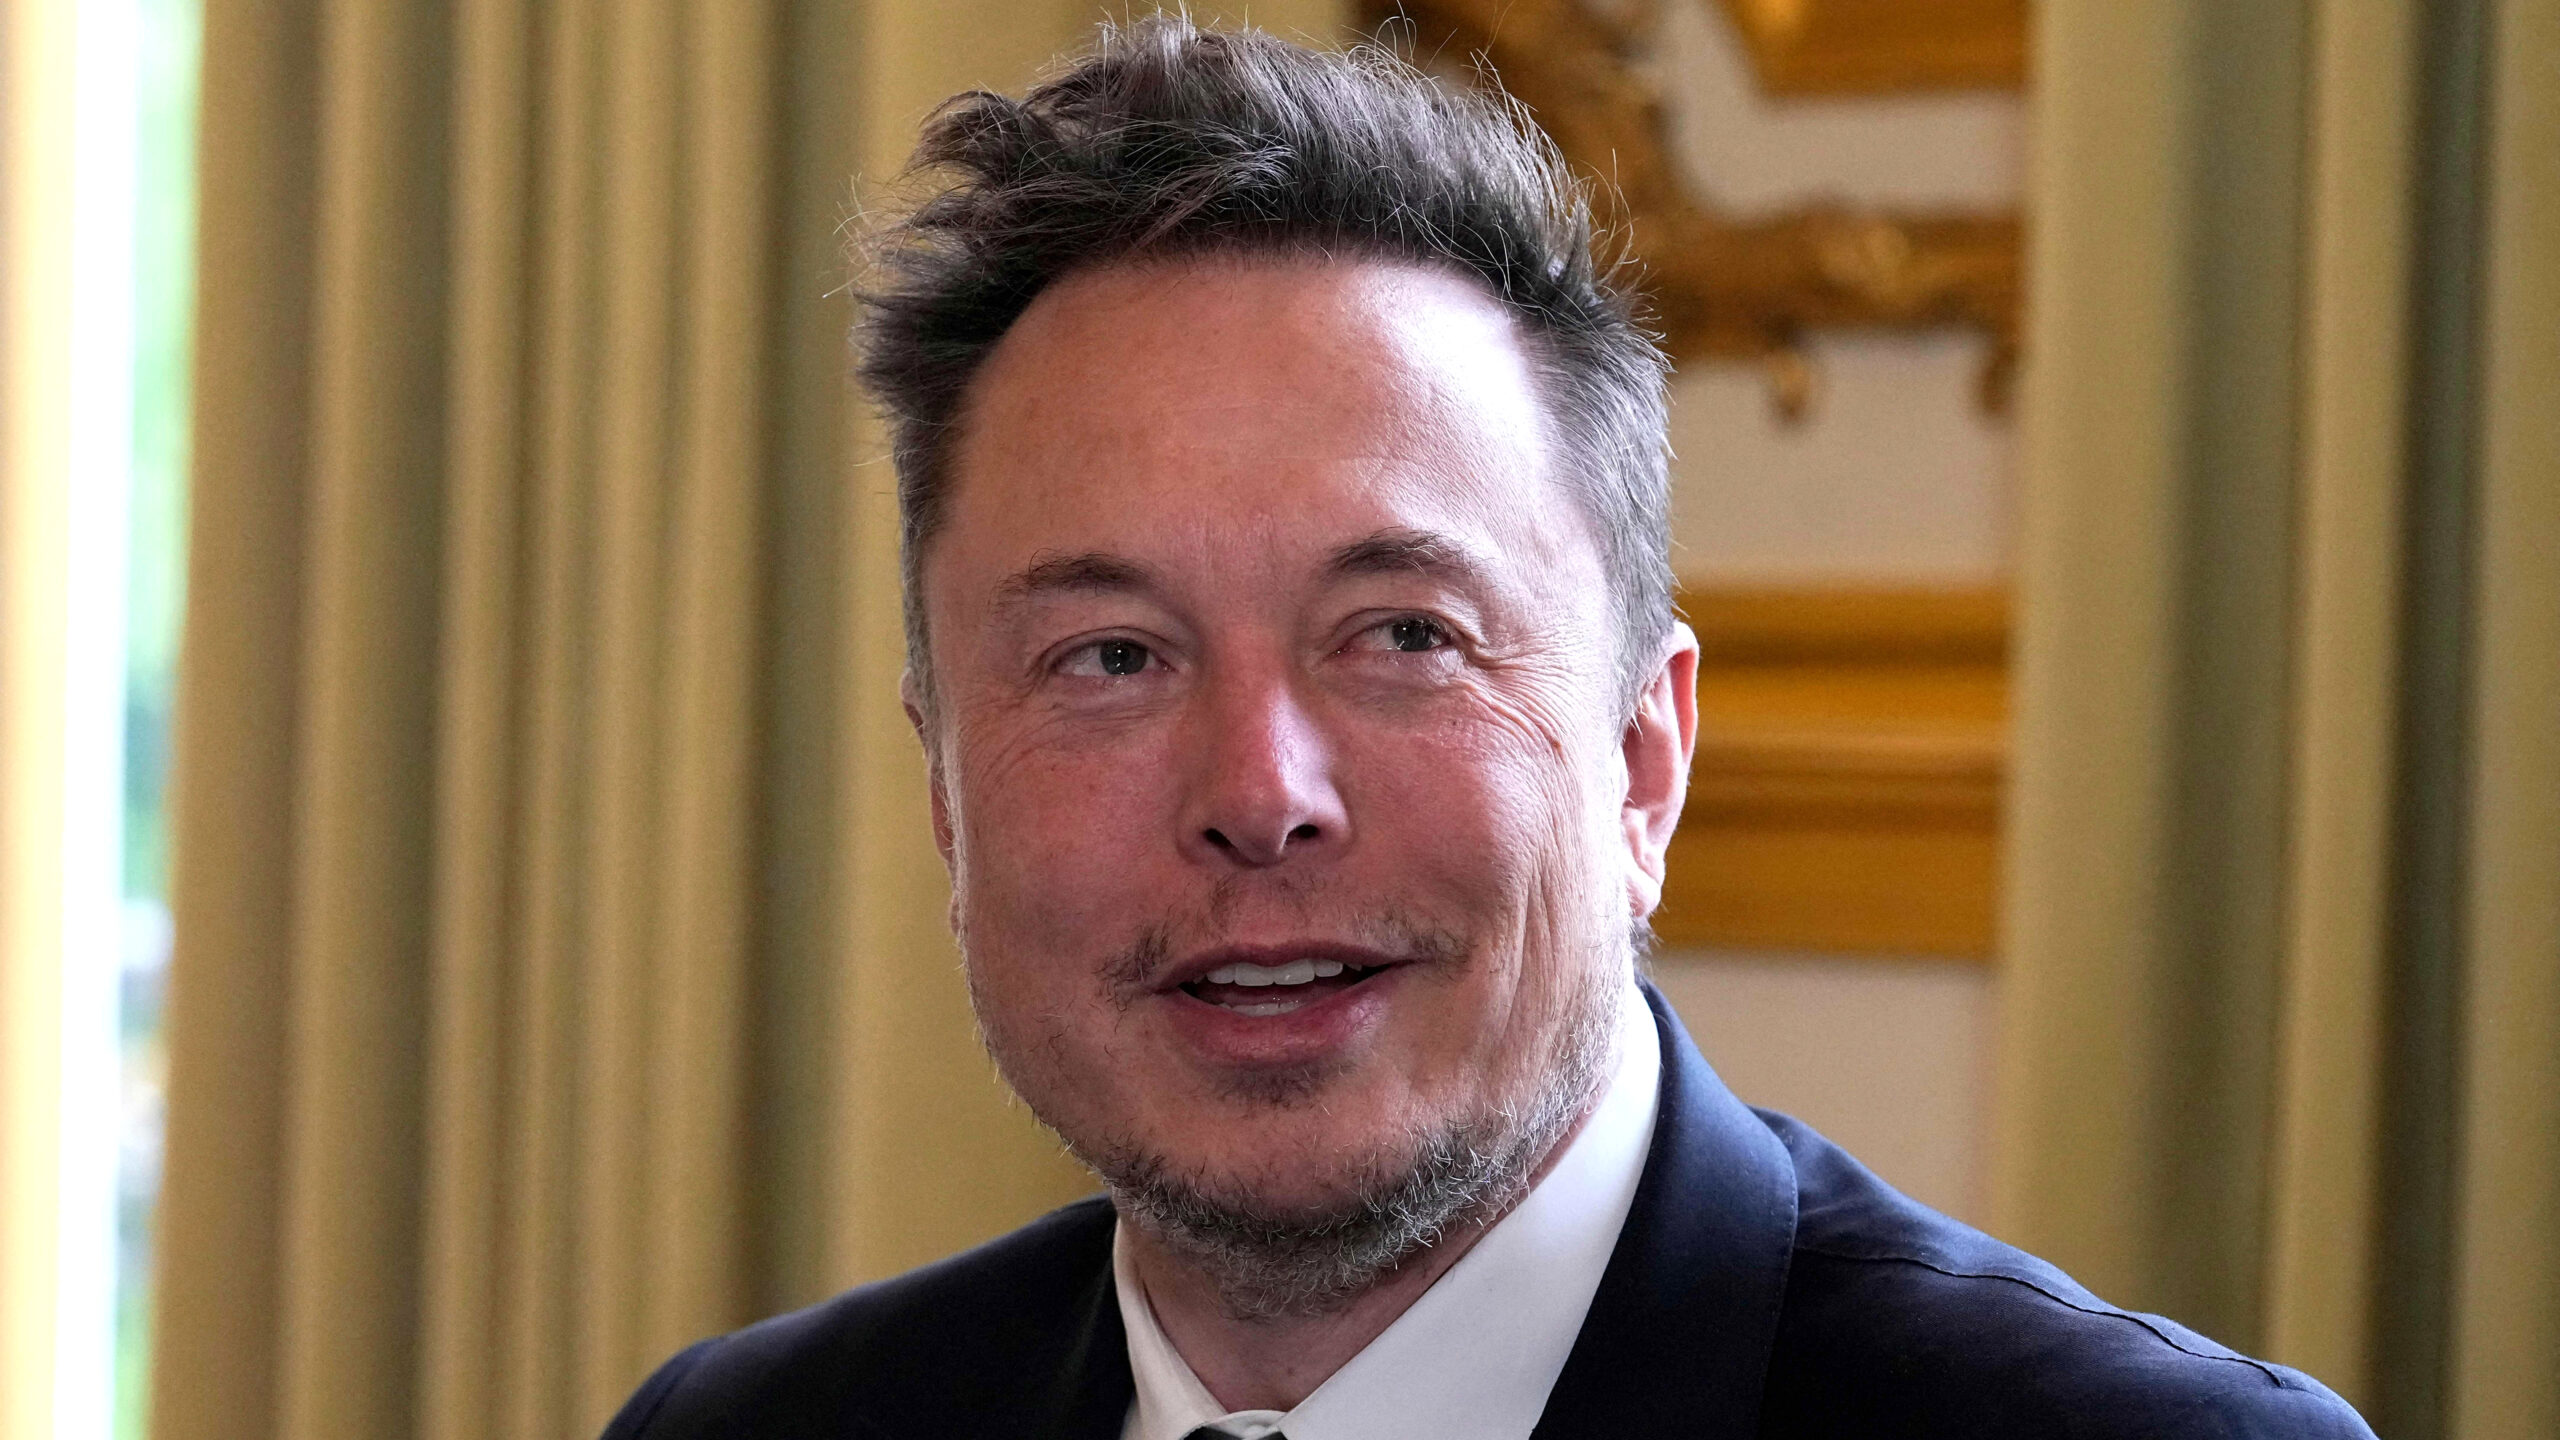 US Virgin Islands subpoenas Elon Musk for documents in JPMorgan Chase lawsuit over Epstein case.